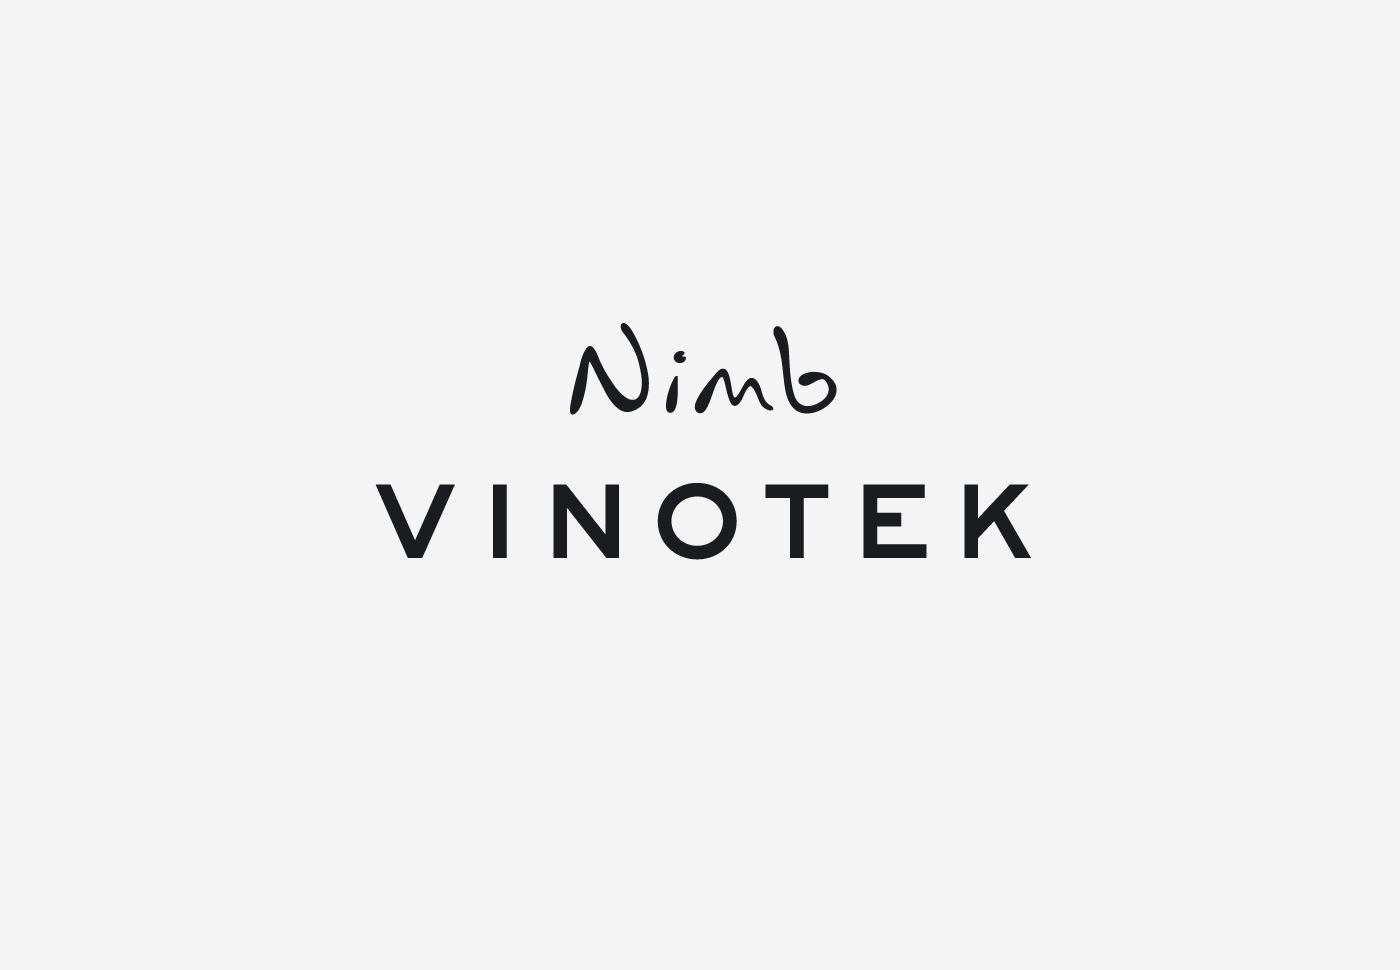 Nimb boutique hotel – Sub brand logotypes